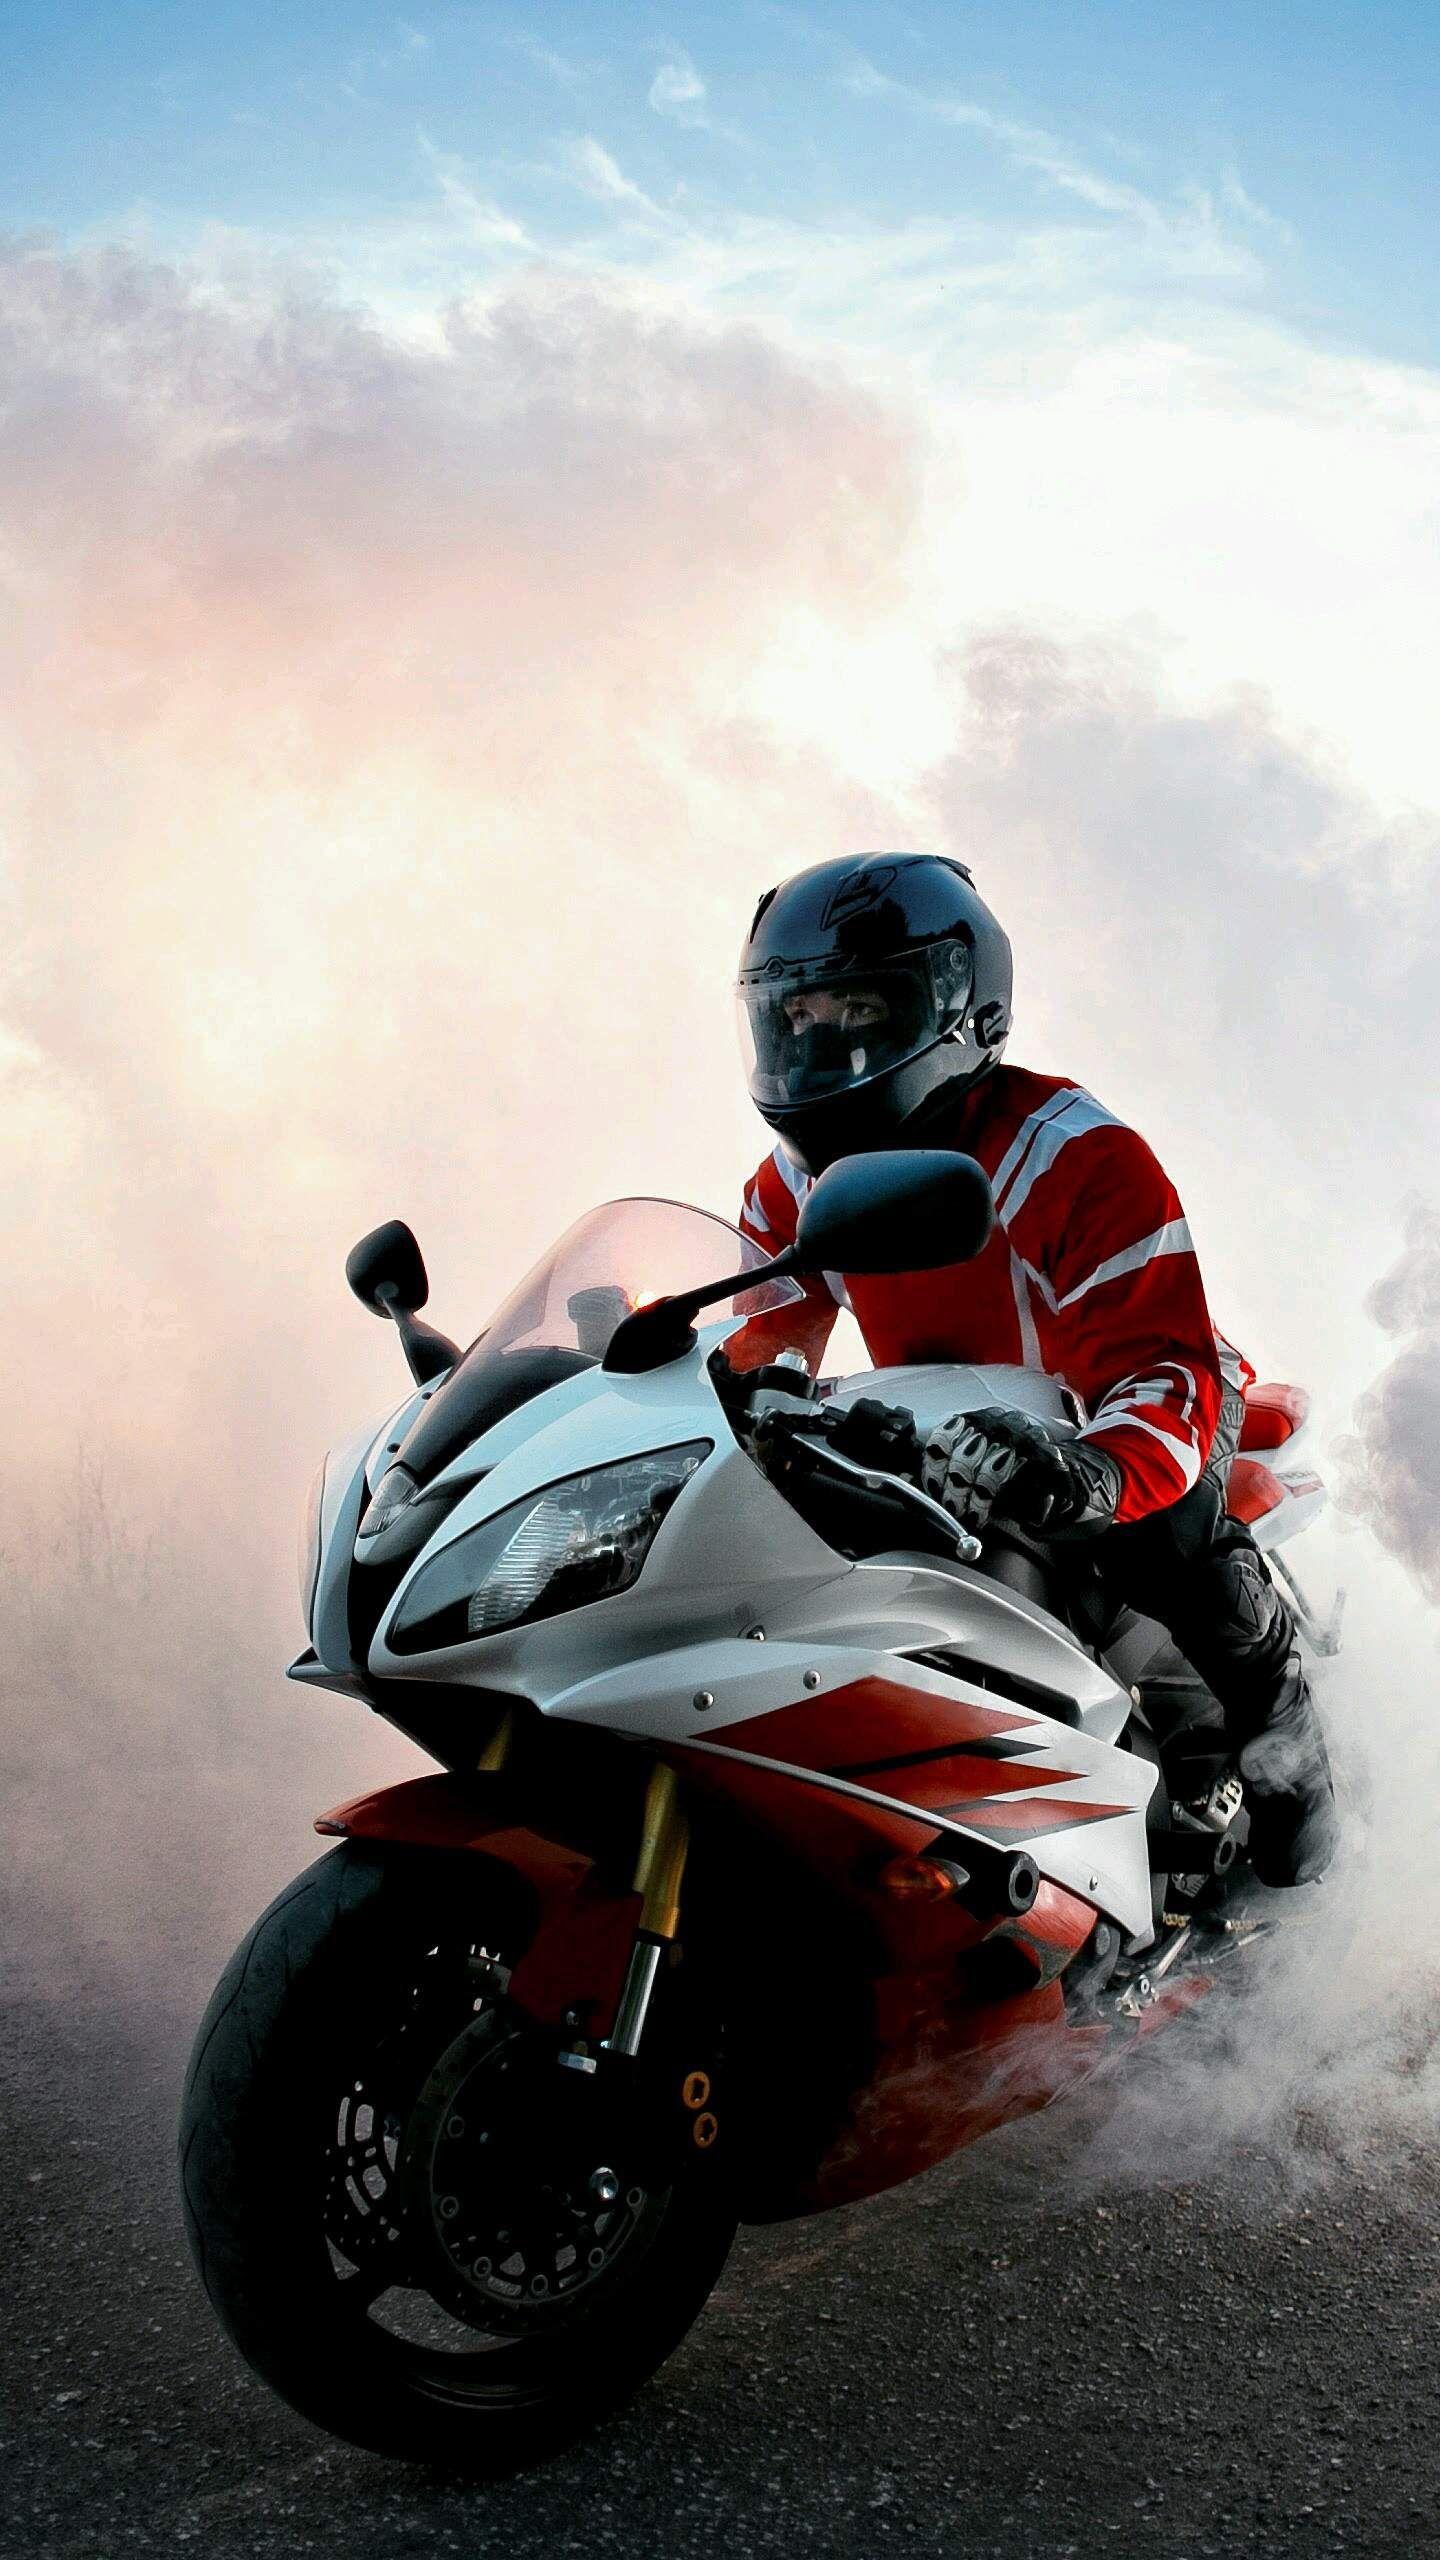 Kawasaki Super Bike Burnout iPhone Wallpaper. Super bikes, Motorcycle wallpaper, Yamaha r6